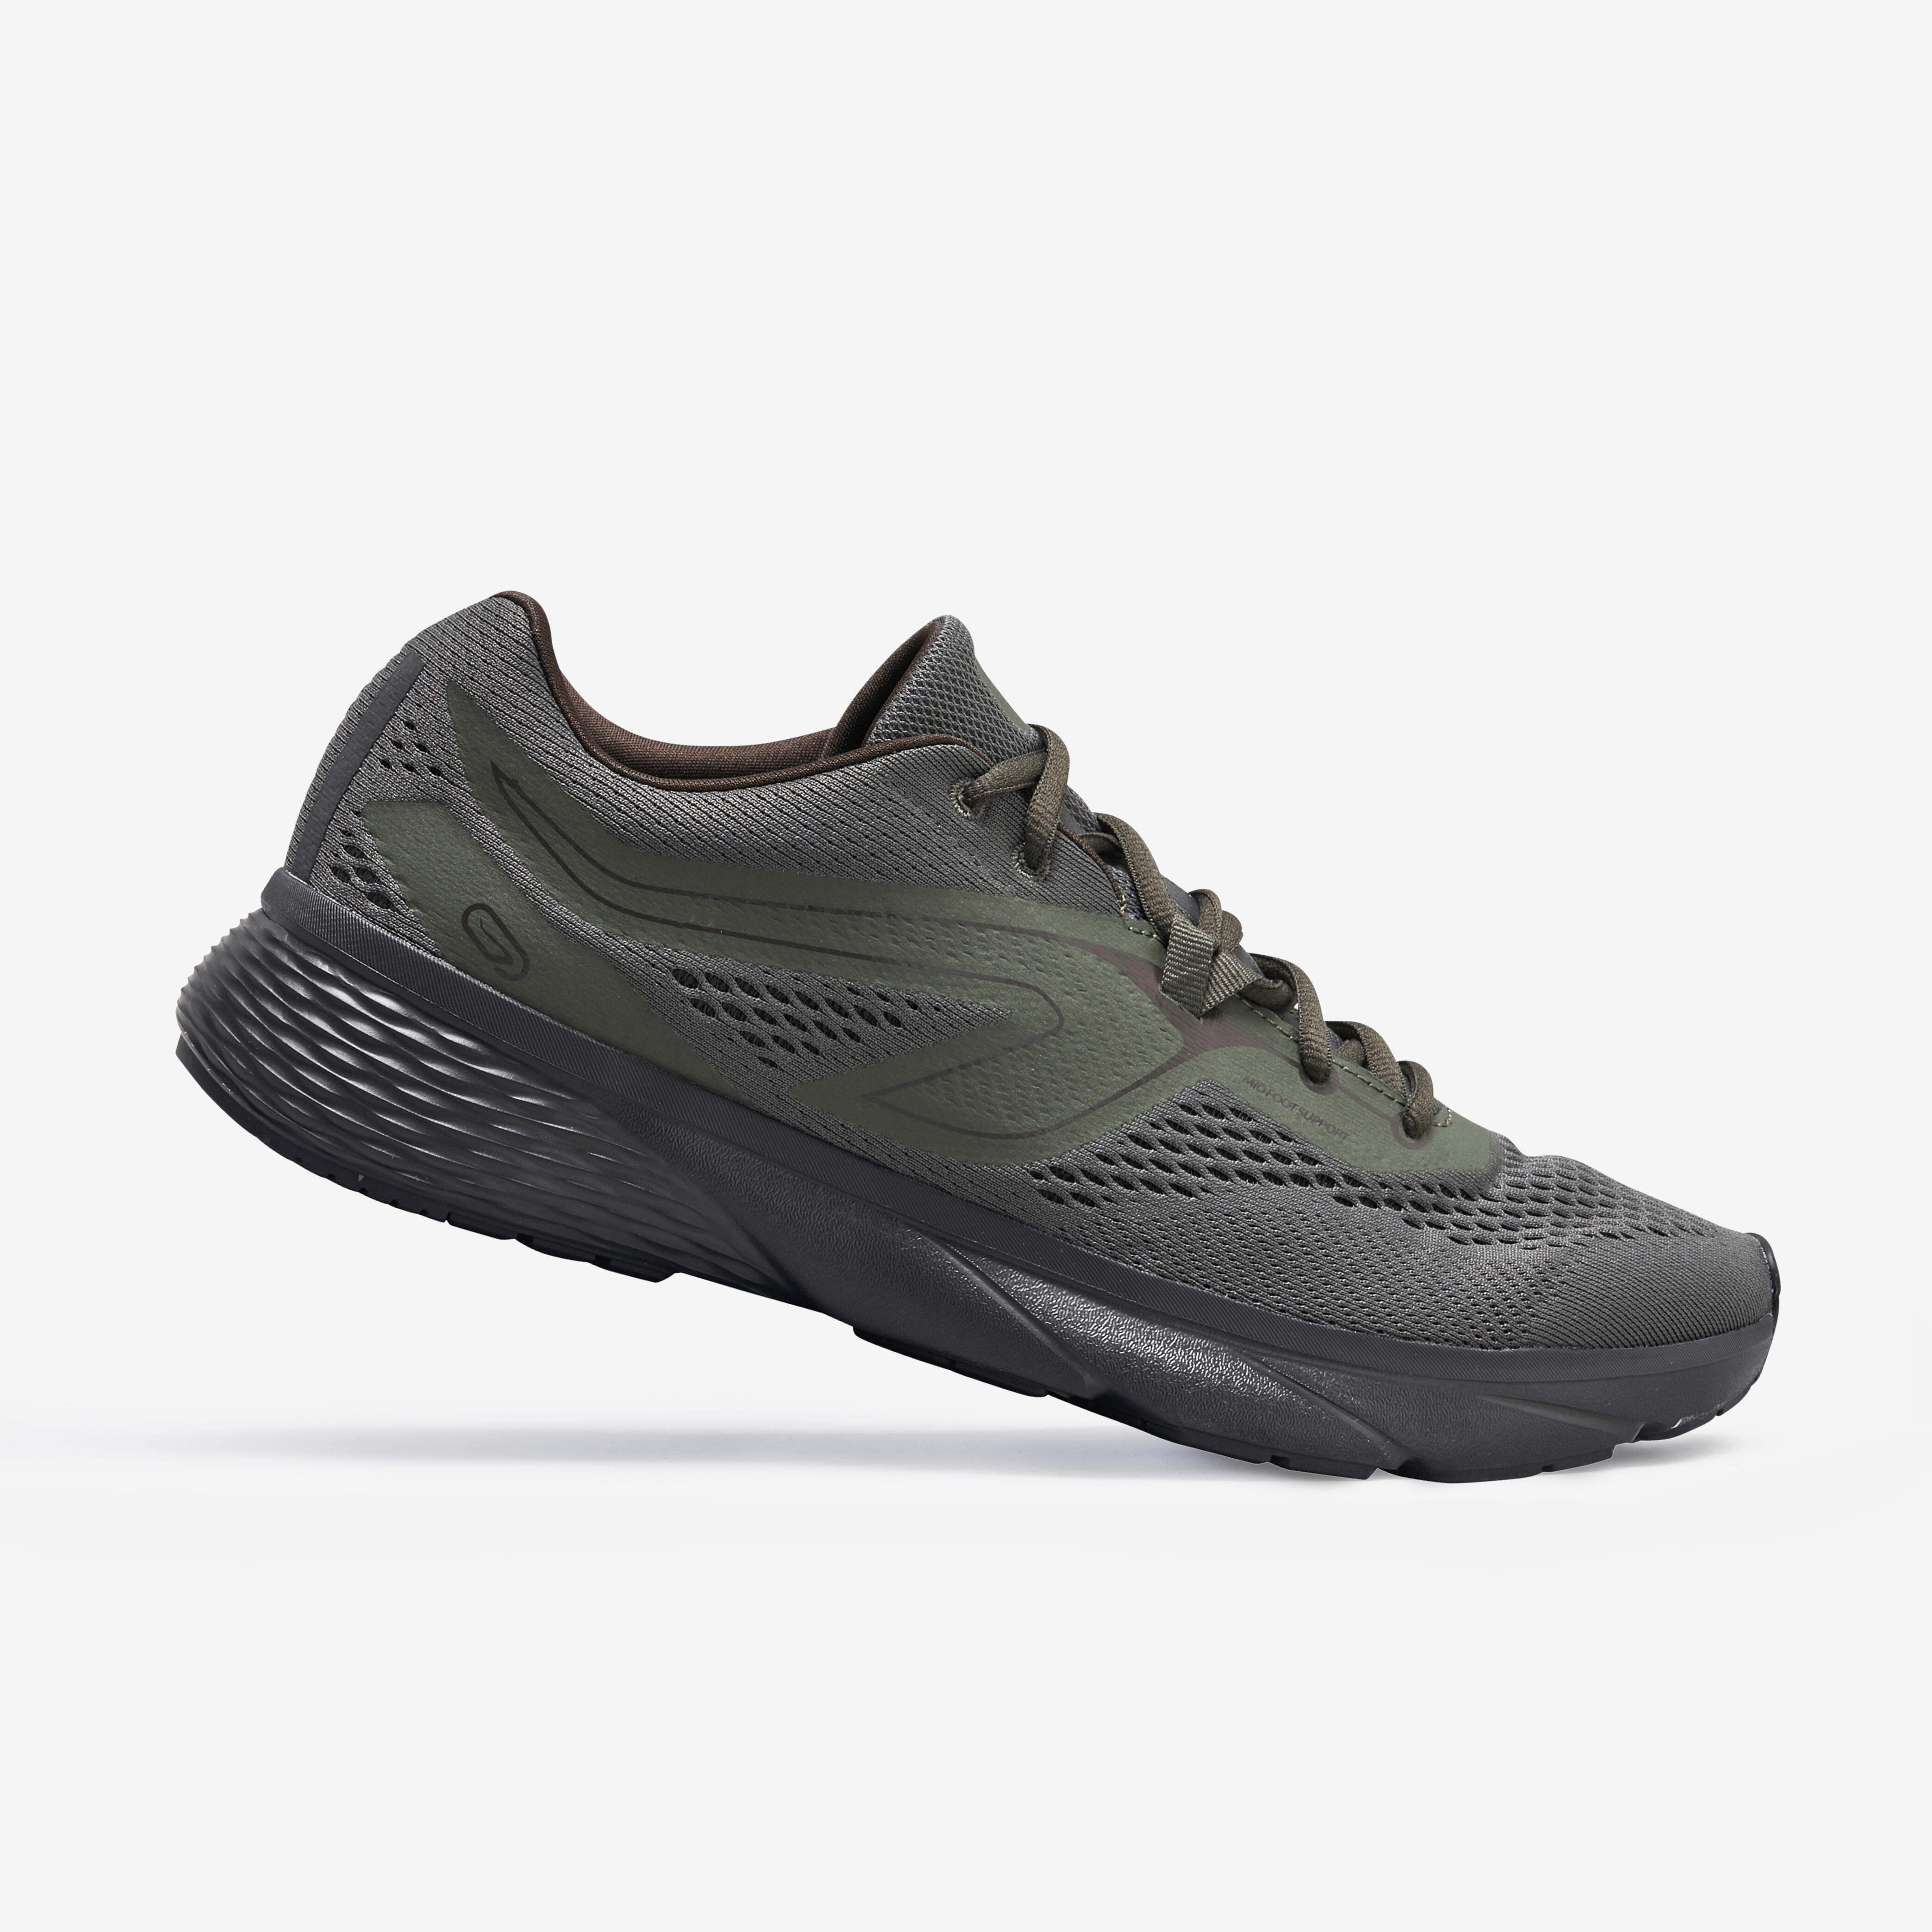 Buy Men's Running Shoes Run Support - Khaki Online | Decathlon